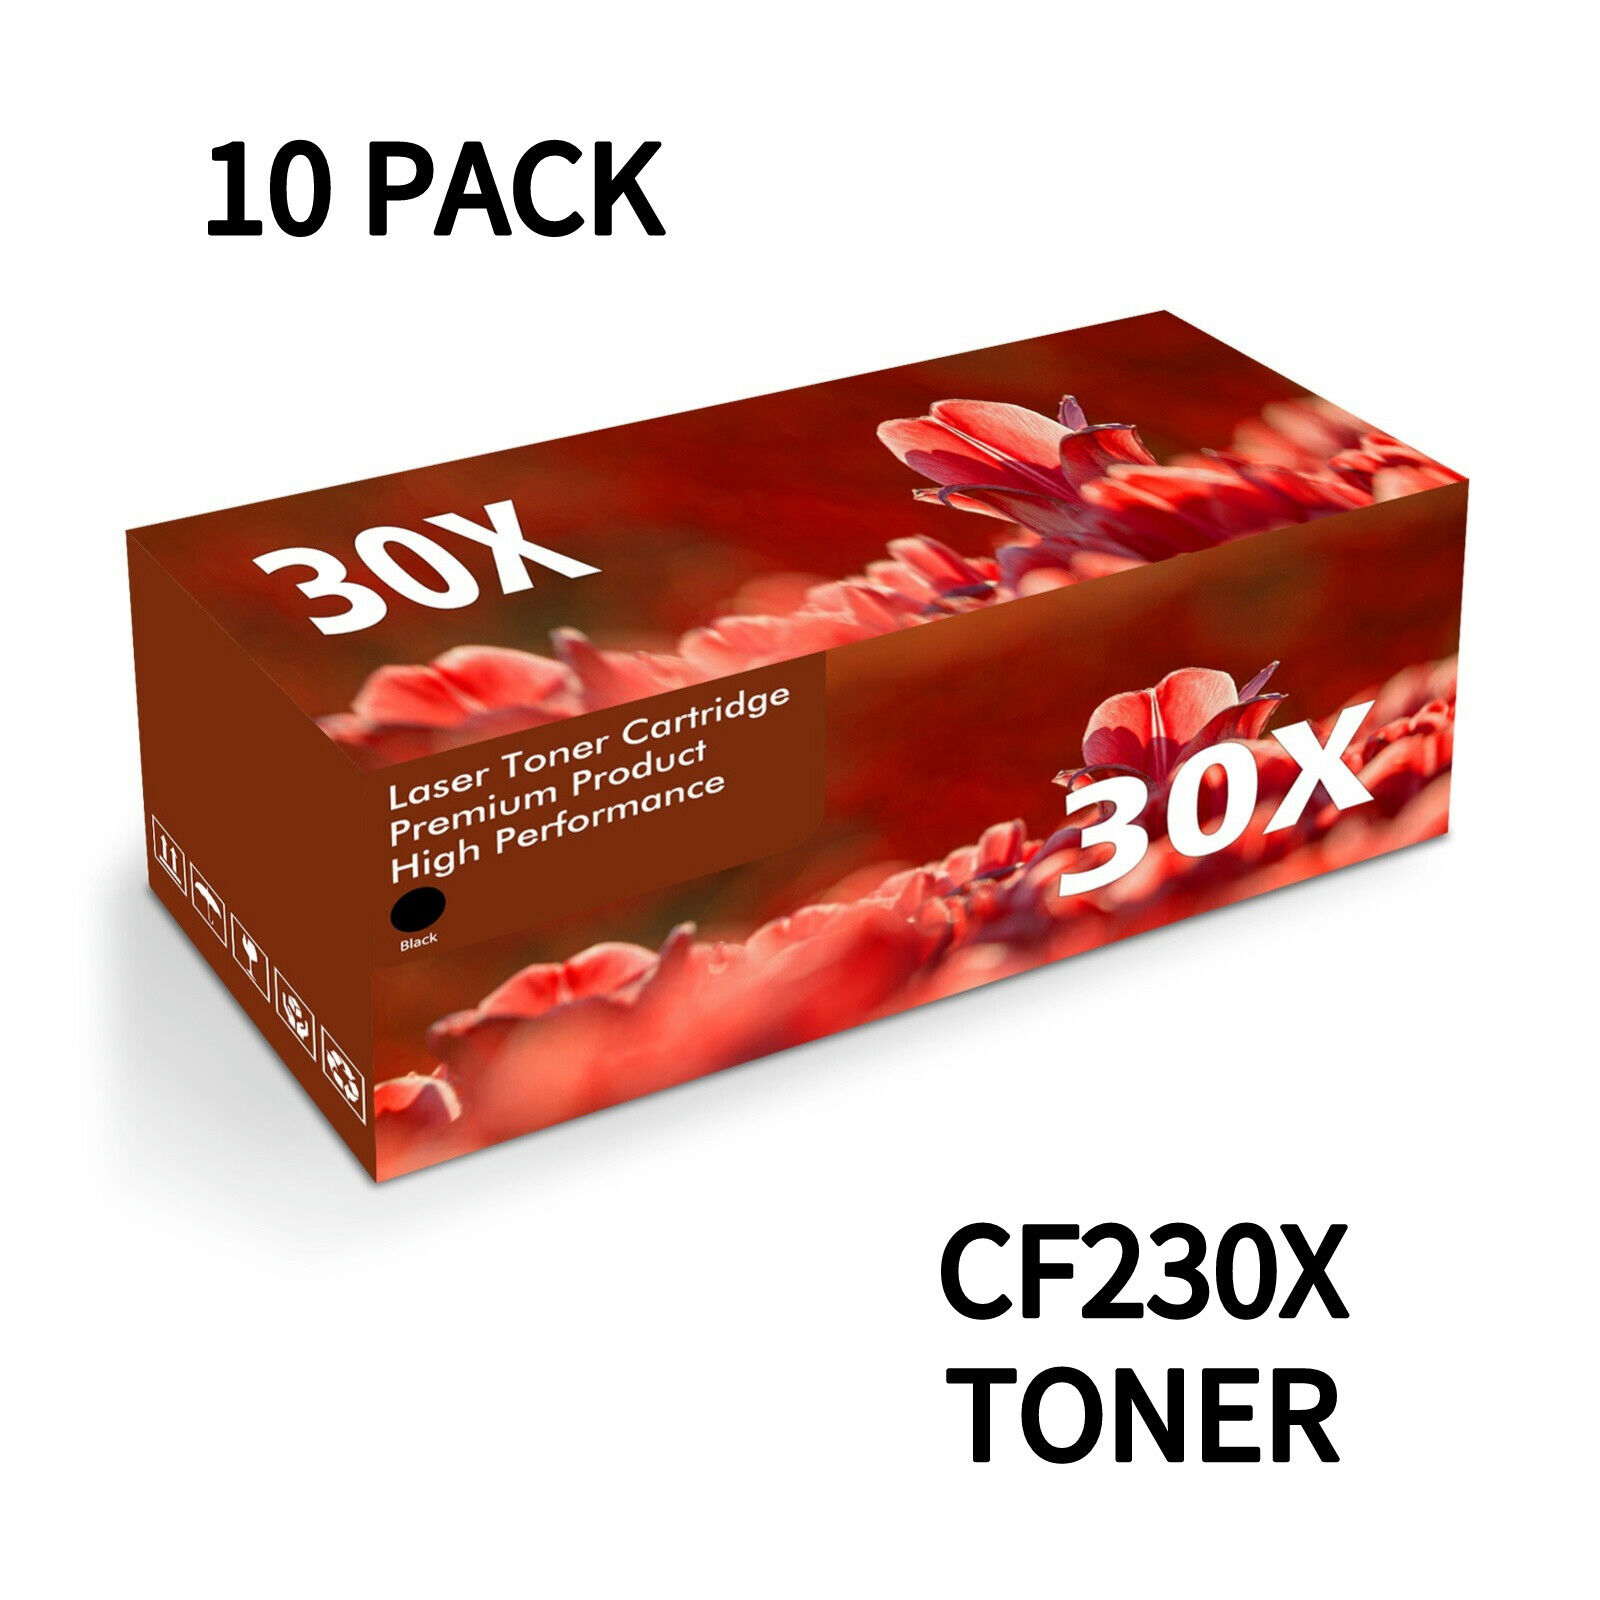 10PK CF230X 30X Toner Cartridge For HP LaserJet Pro MFP M203dw M227fdn M227fdw